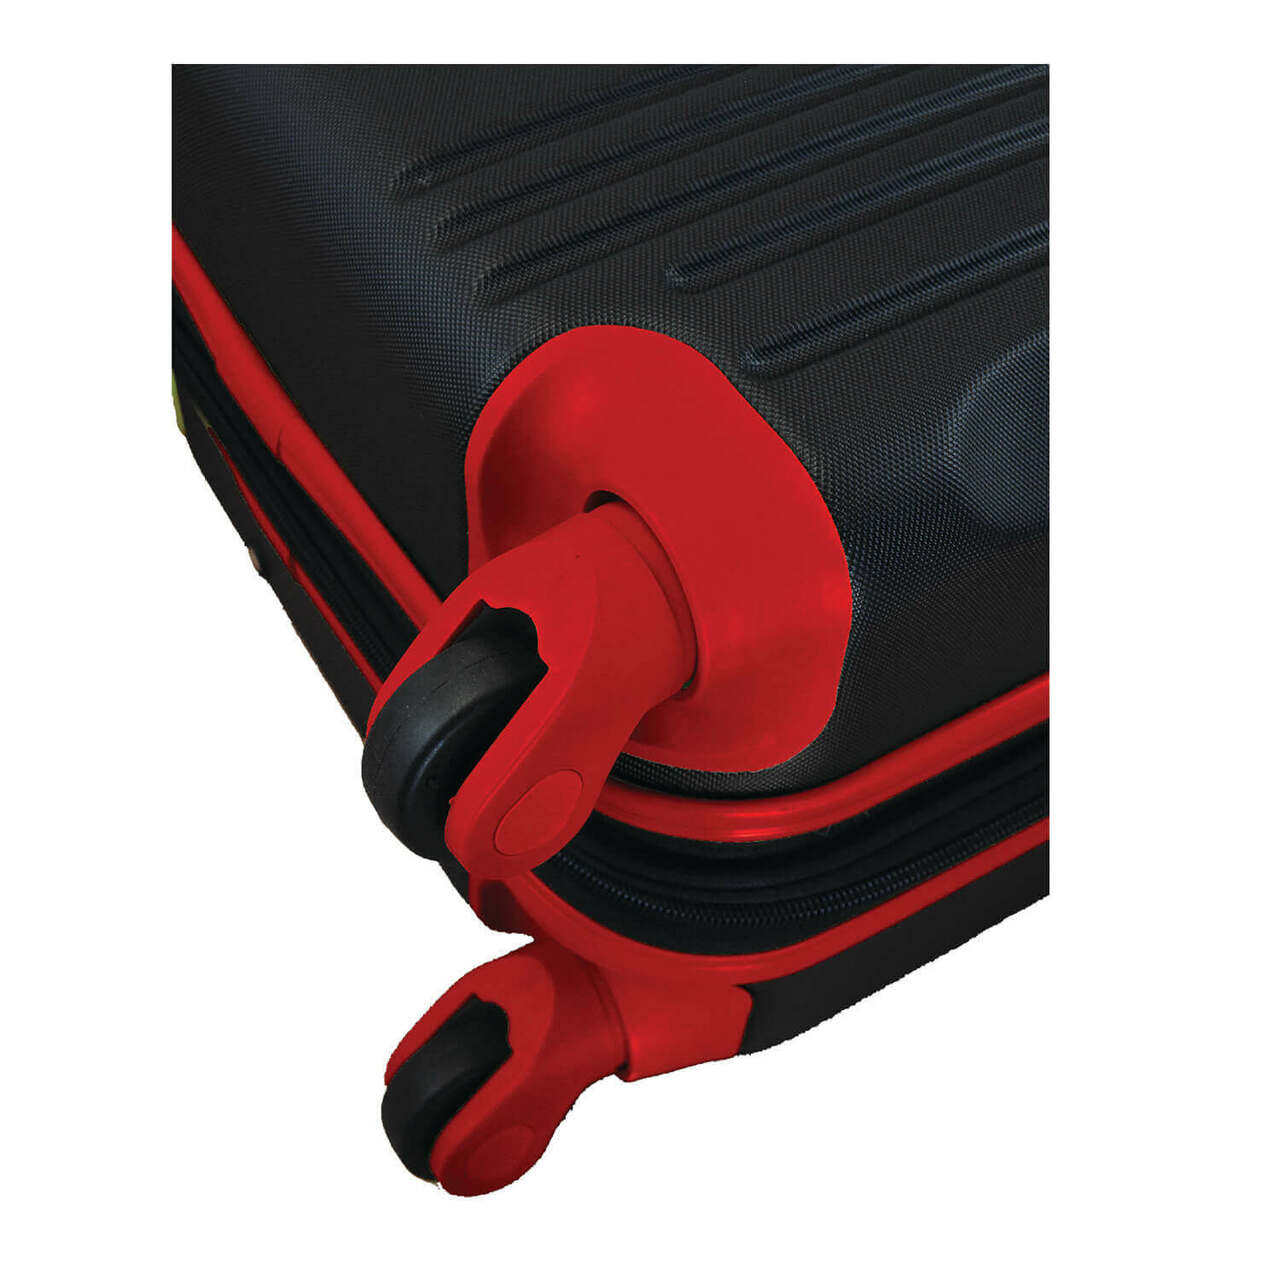 Louisville Carry On Spinner Luggage | Louisville Hardcase Two-Tone Luggage Carry-on Spinner in Red